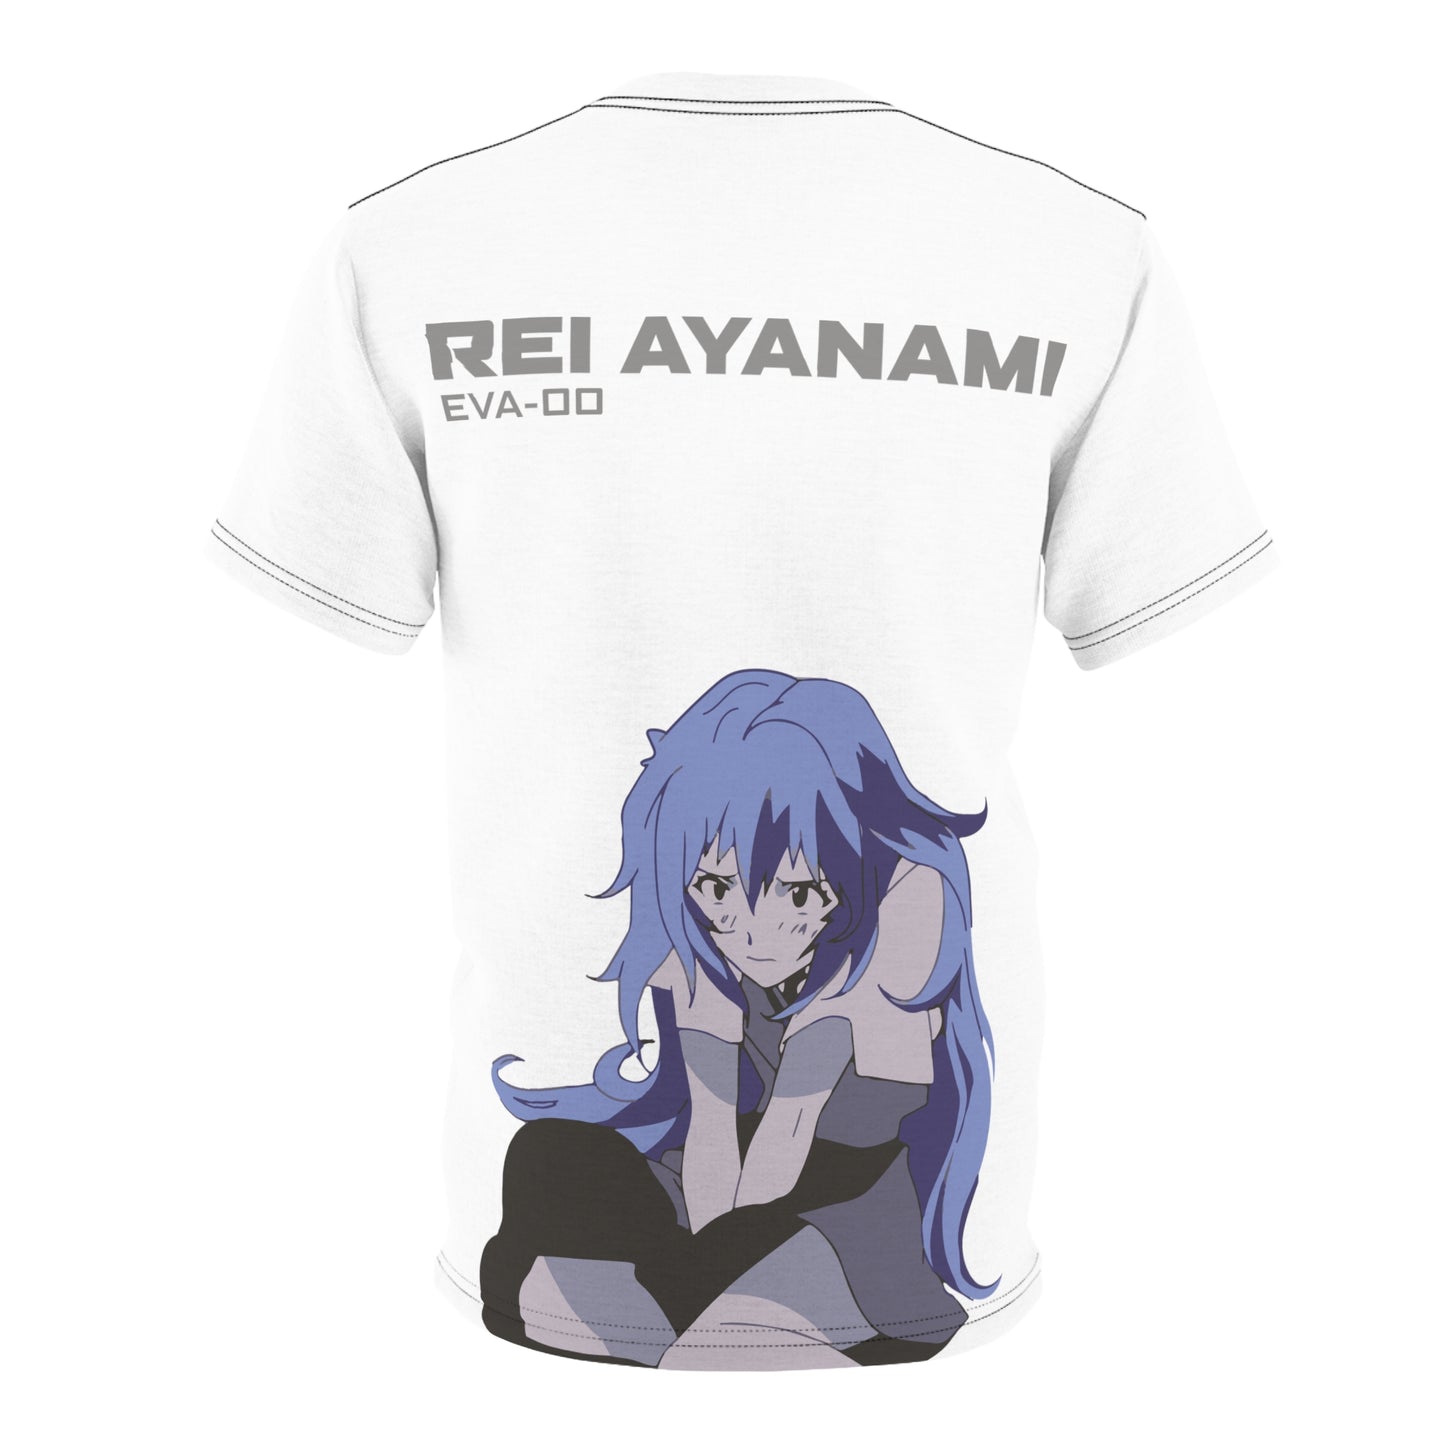 Ayanami Rey - Tee